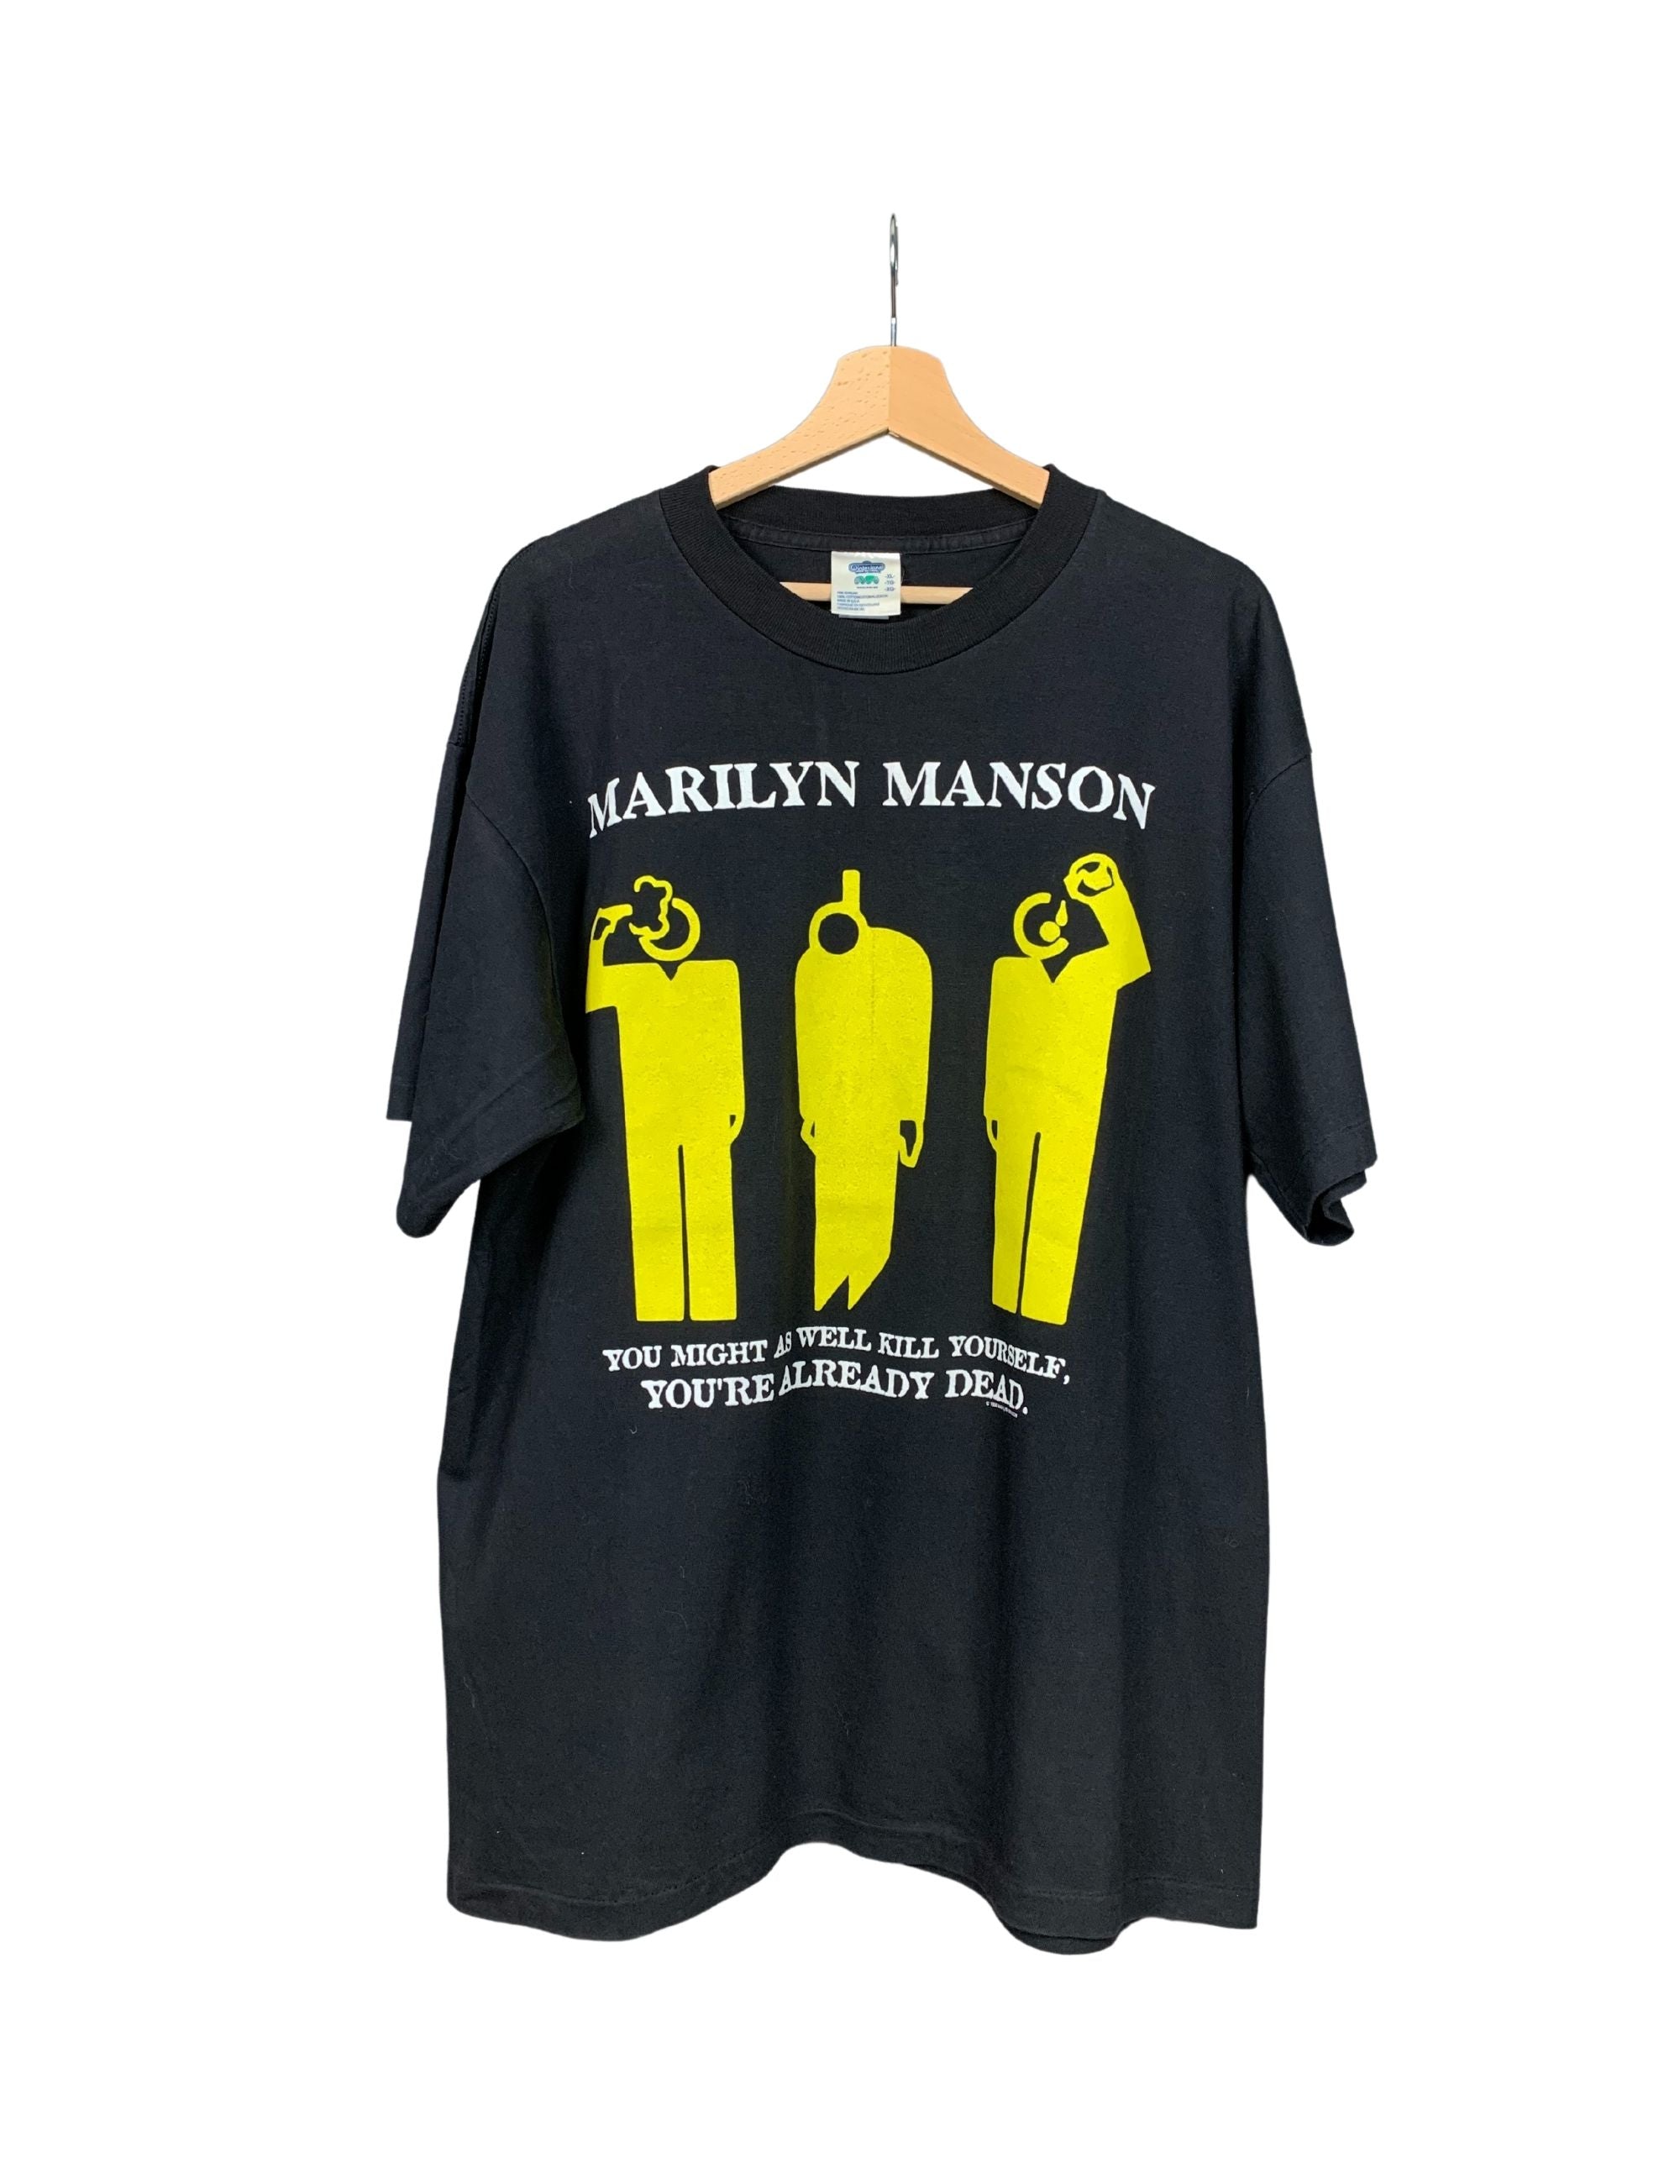 Marilyn Manson 1996 They're Already Dead Vintage T-Shirt